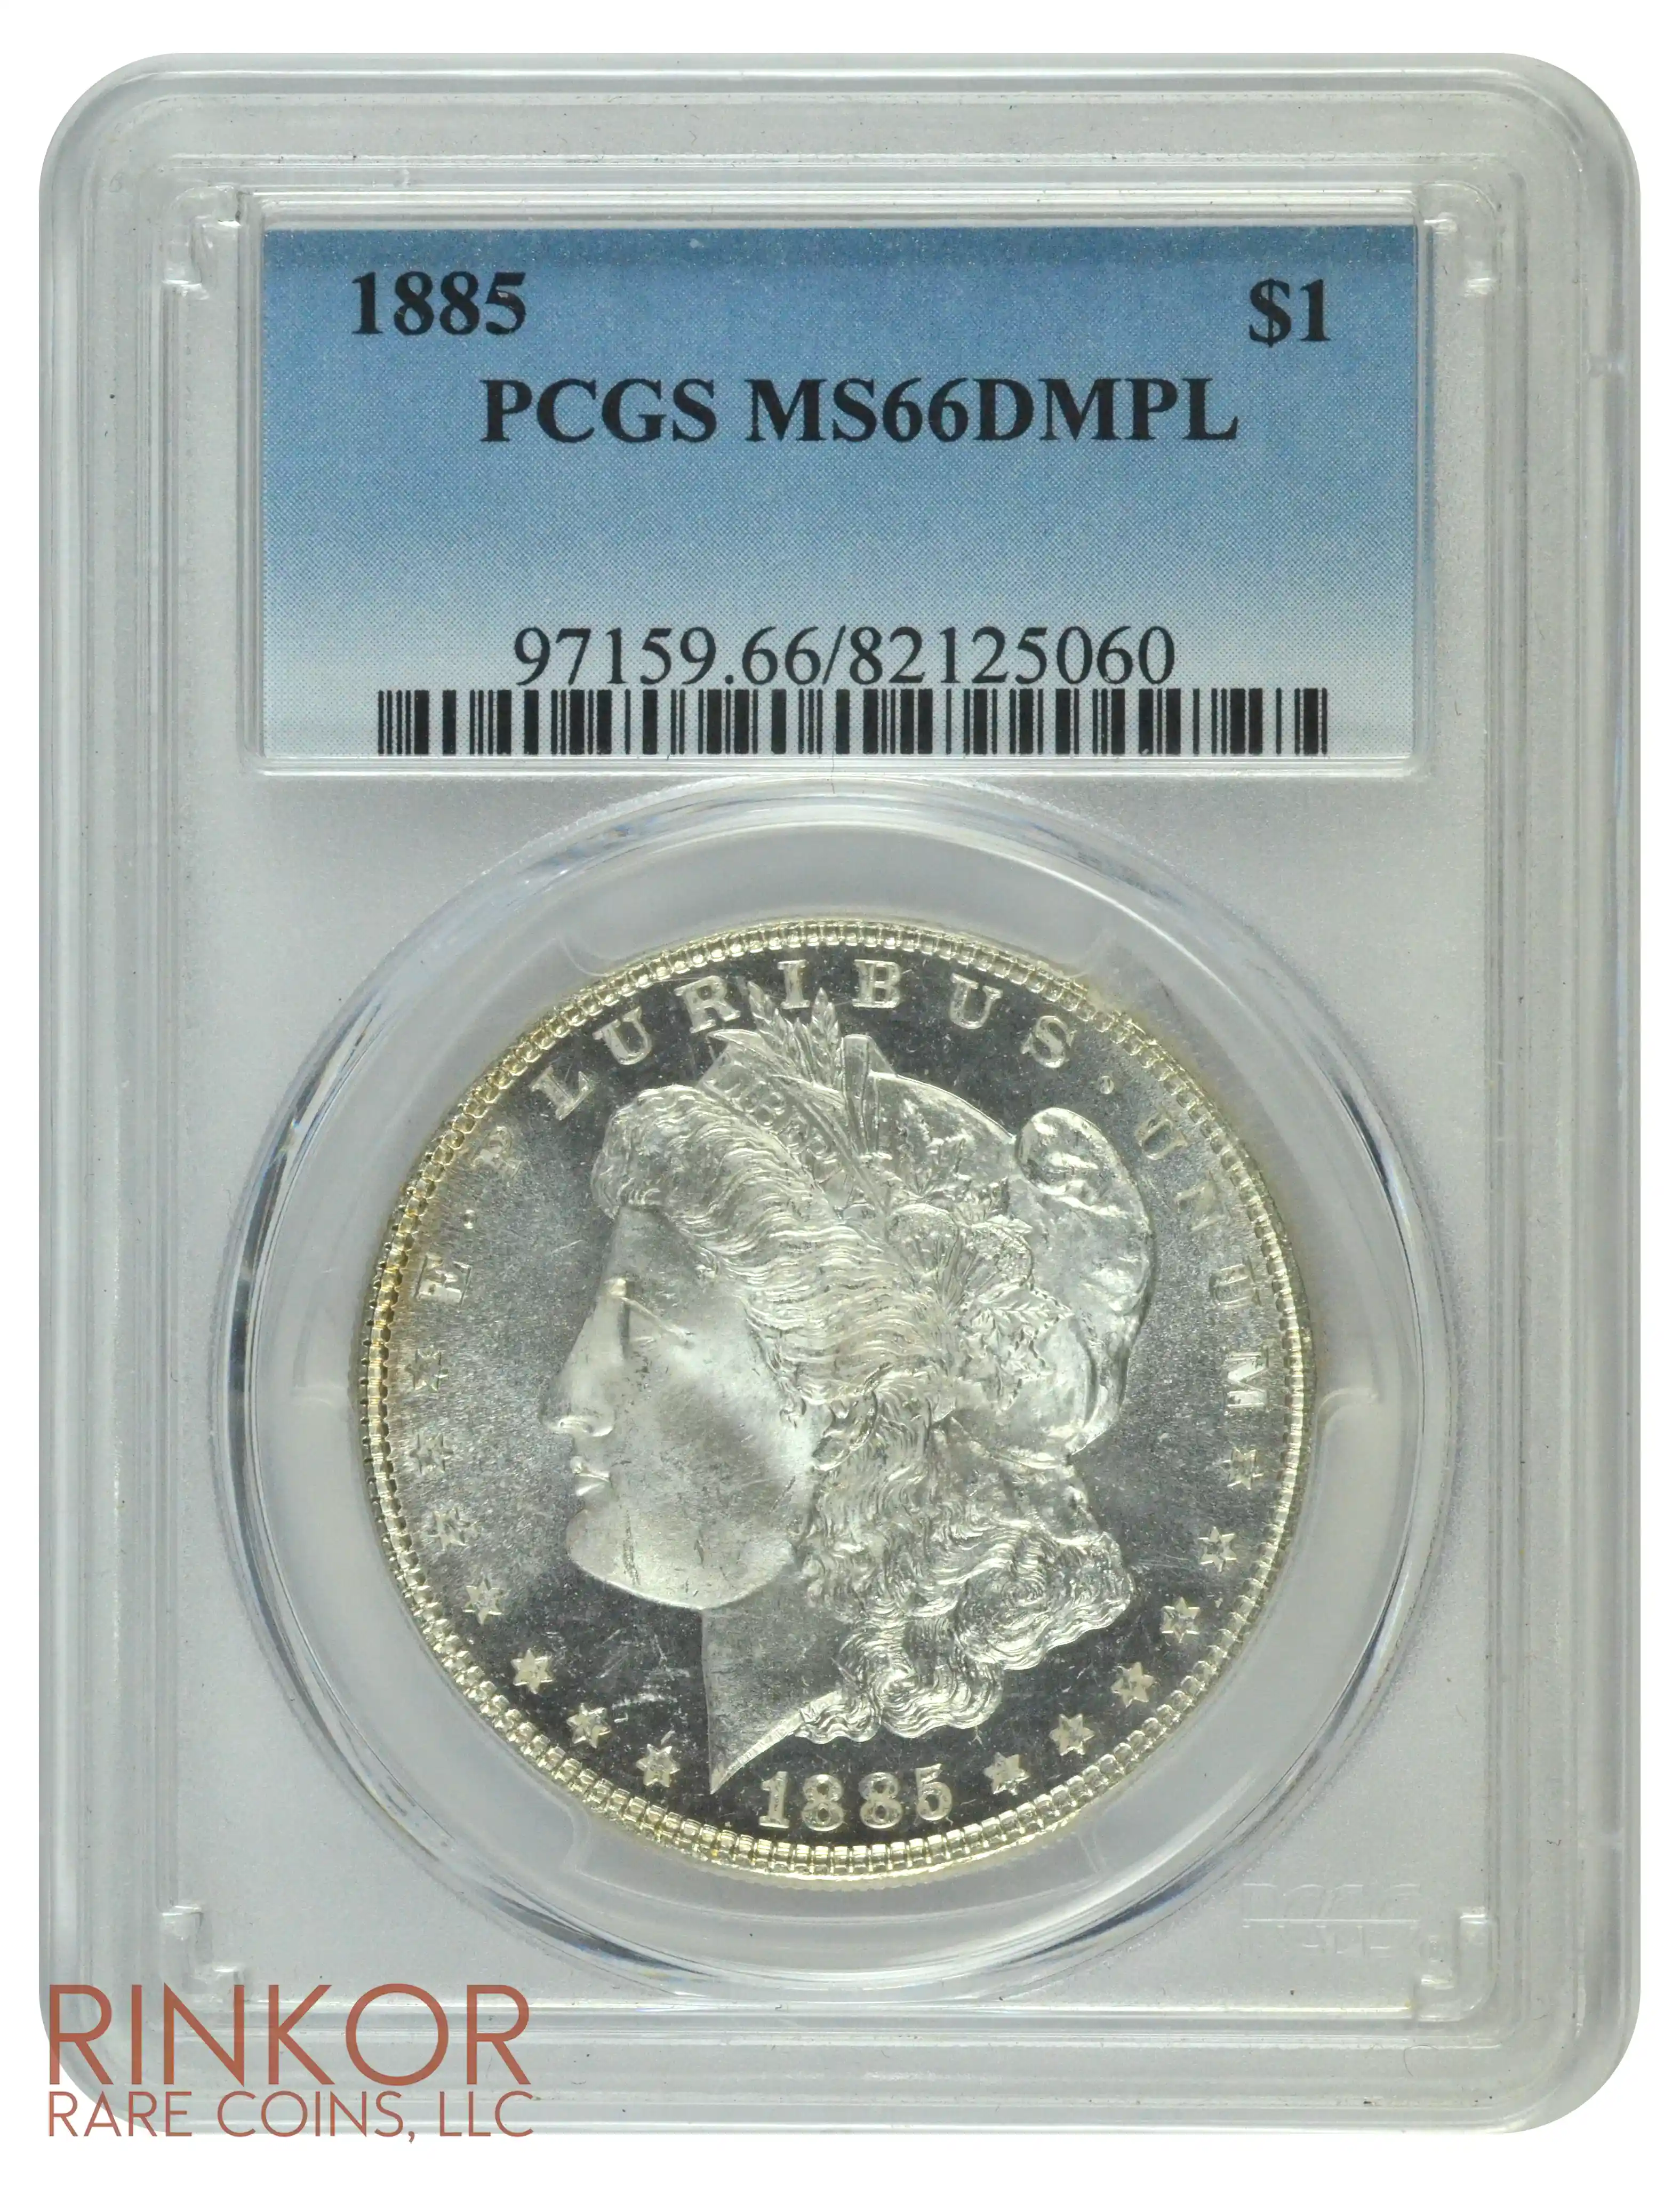 1885 $1 PCGS MS 66 DMPL 